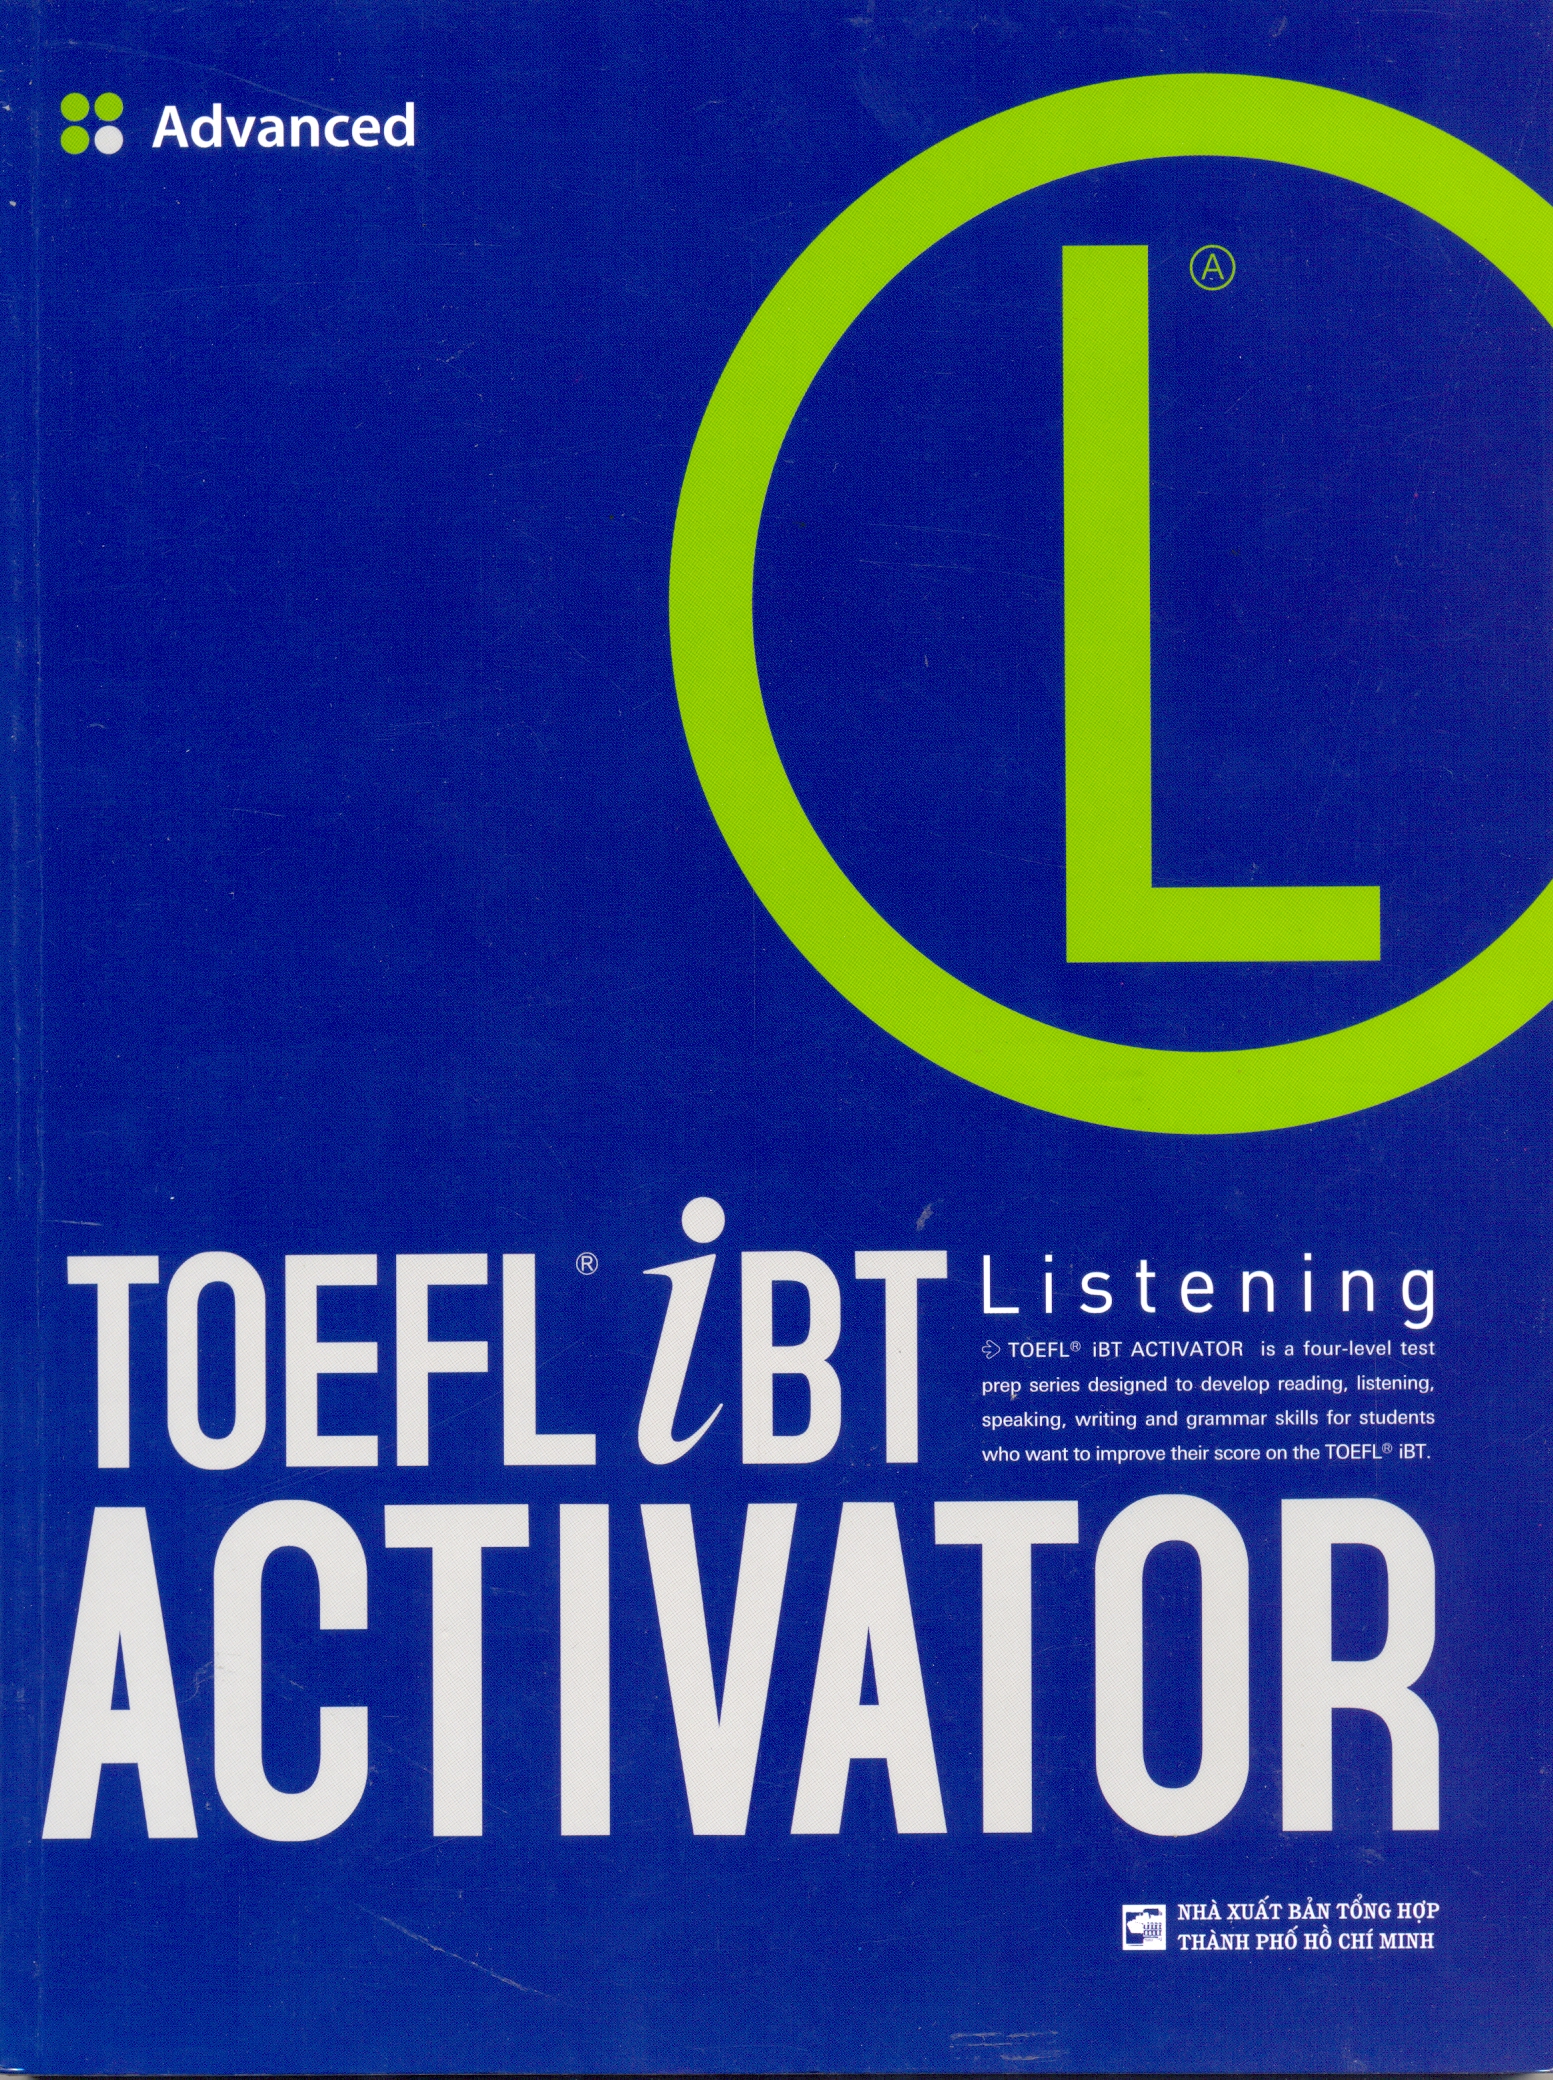 Advanced TOEFL iBT Activator, Listening 